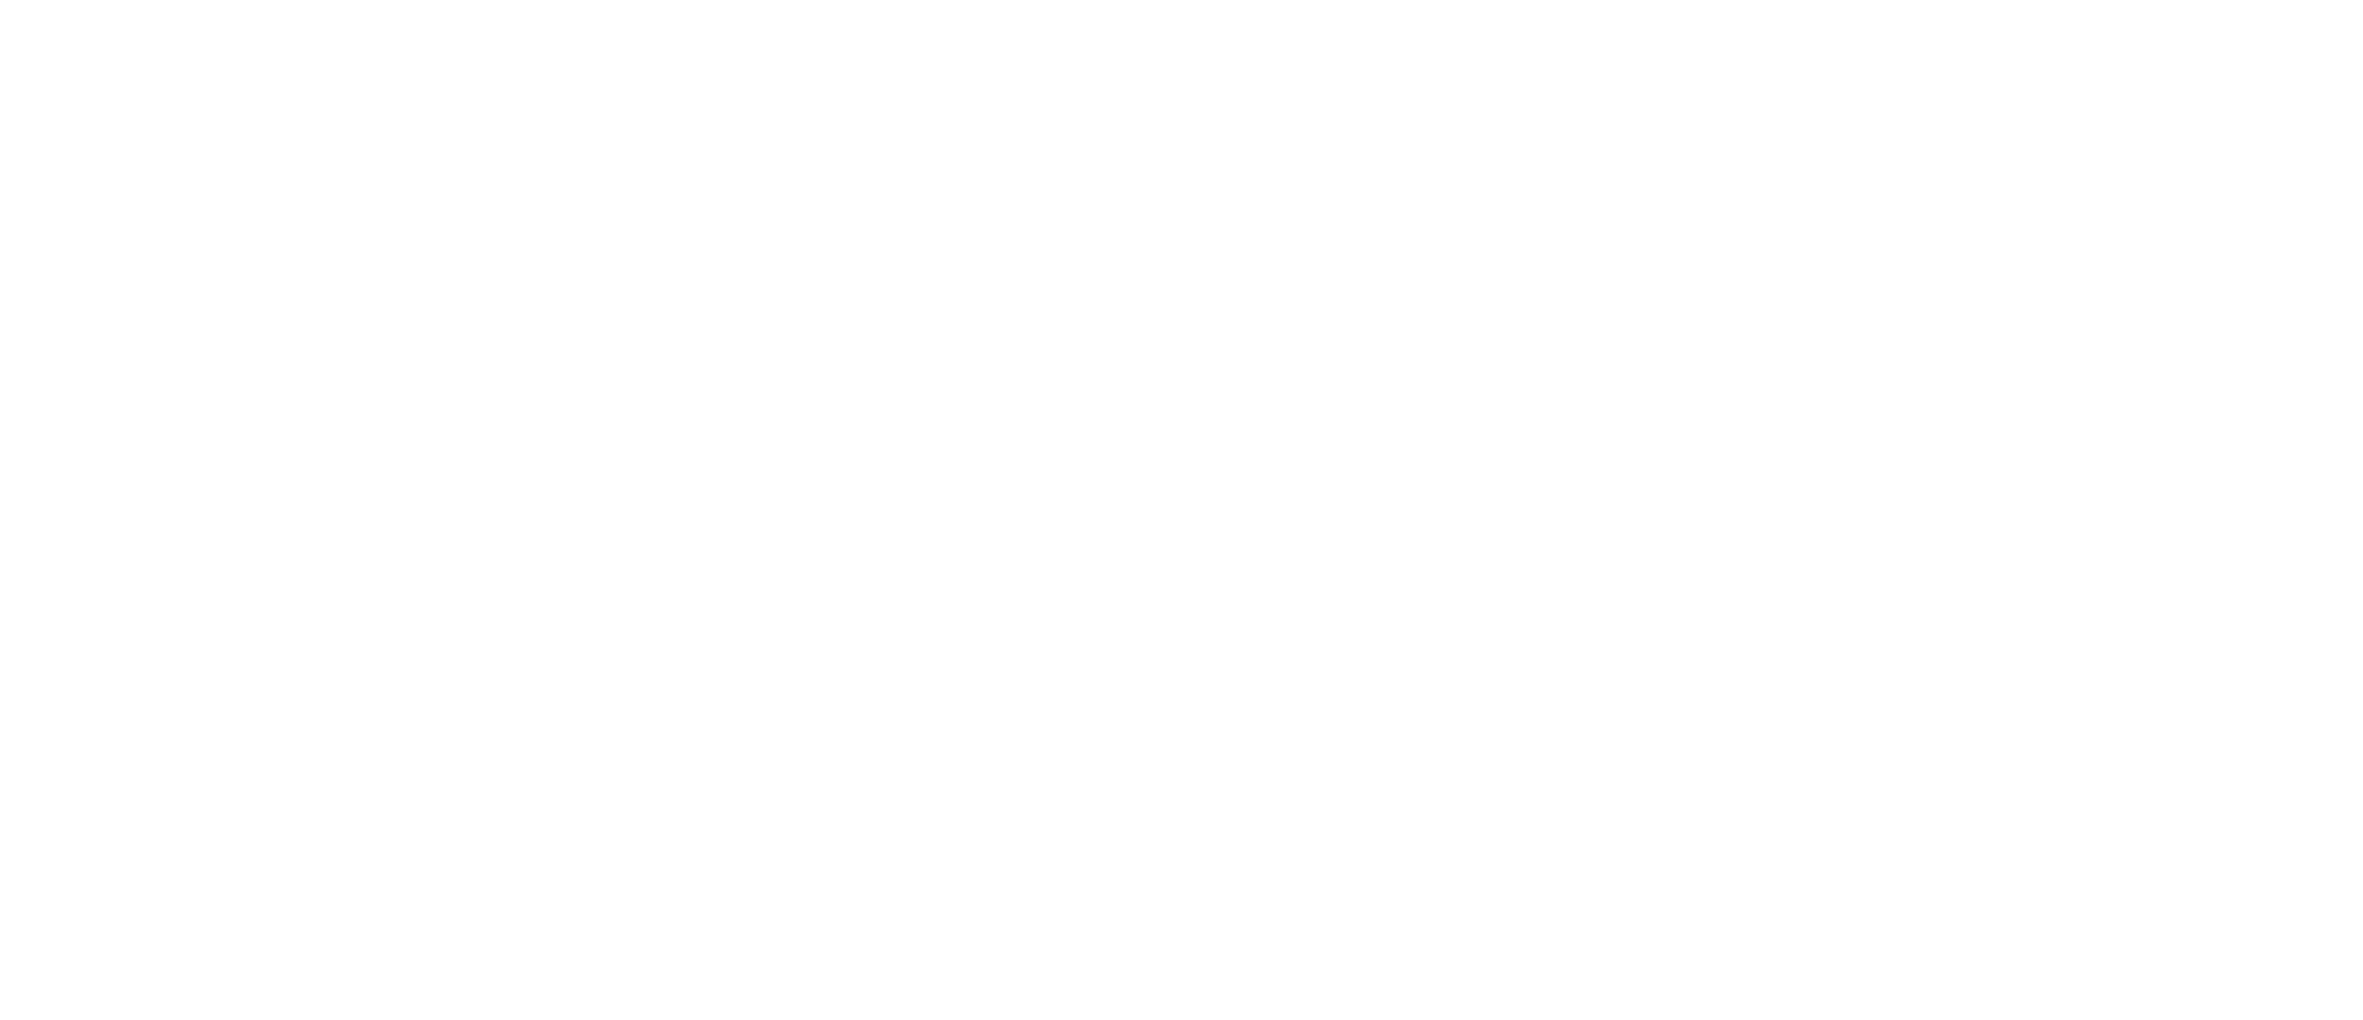 Costa Rica StarVillas